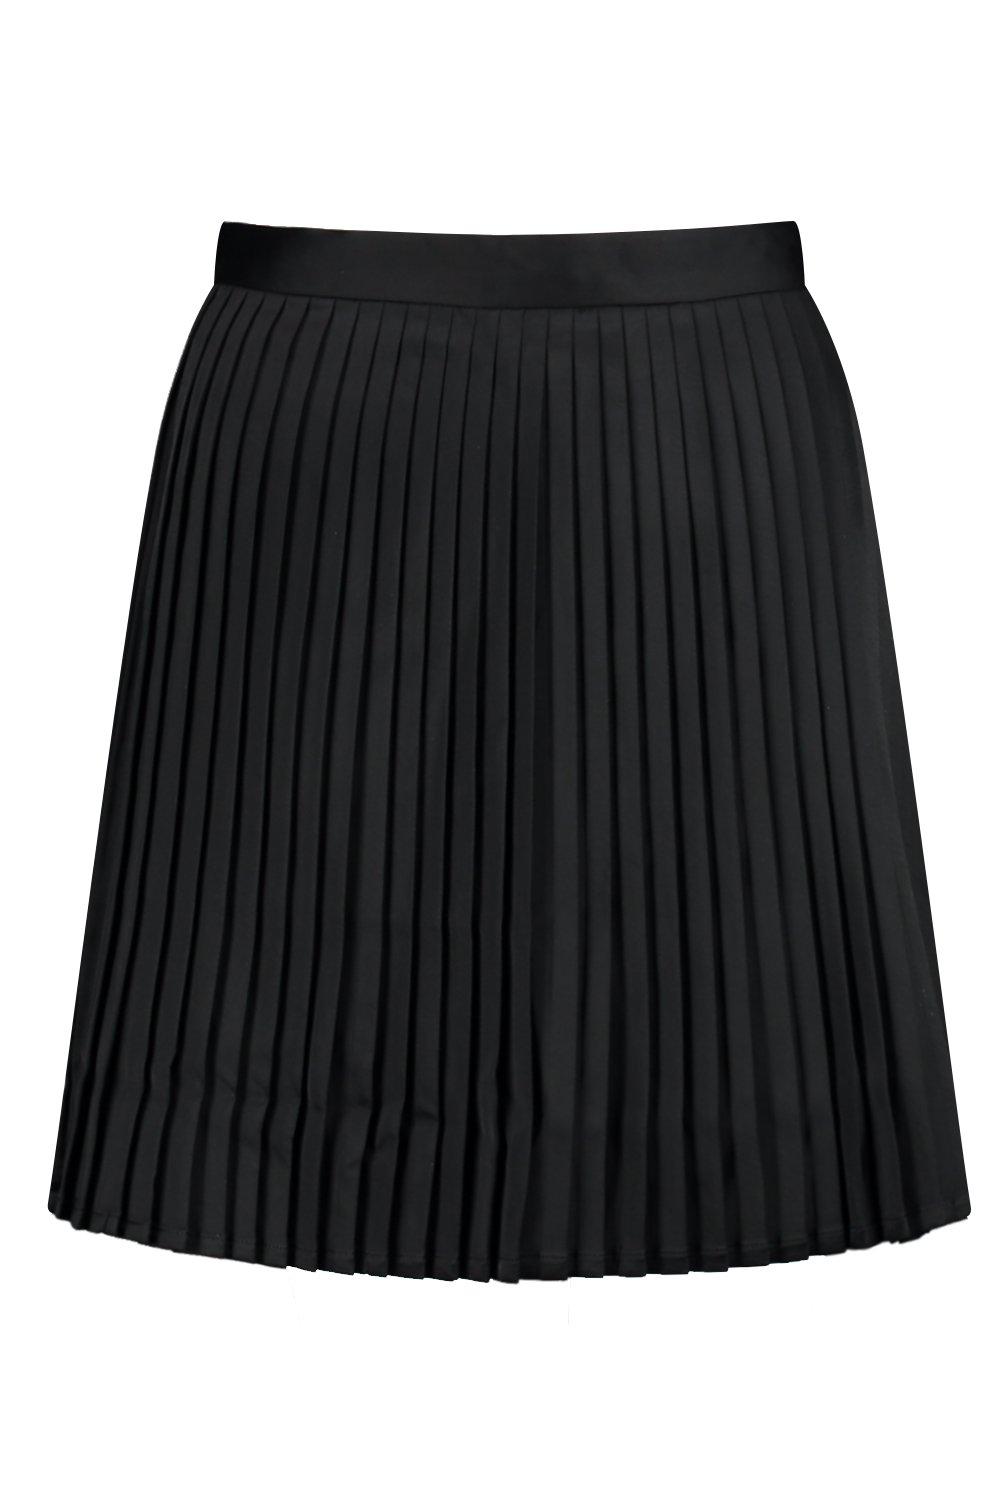 Boohoo Womens Emilia Matte Satin Pleated Mini Skirt | eBay